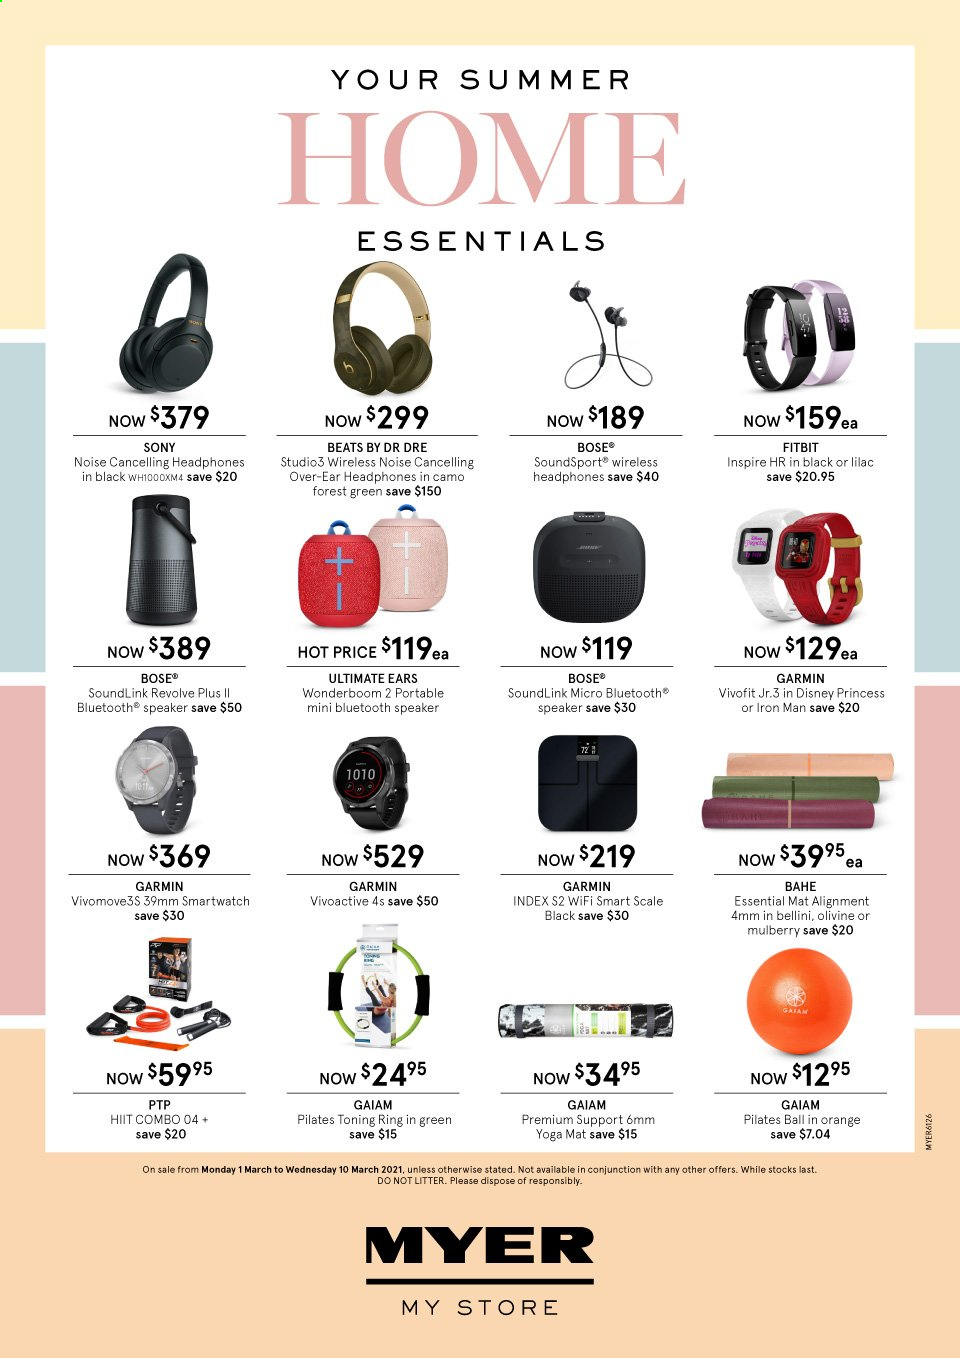 thumbnail - Myer Catalogue - 1 Mar 2021 - 10 Mar 2021 - Sales products - scale, Disney, ruler, Garmin, Fitbit, smart watch, Sony, Beats, BOSE, speaker, Ultimate Ears, bluetooth speaker, headphones, princess. Page 2.